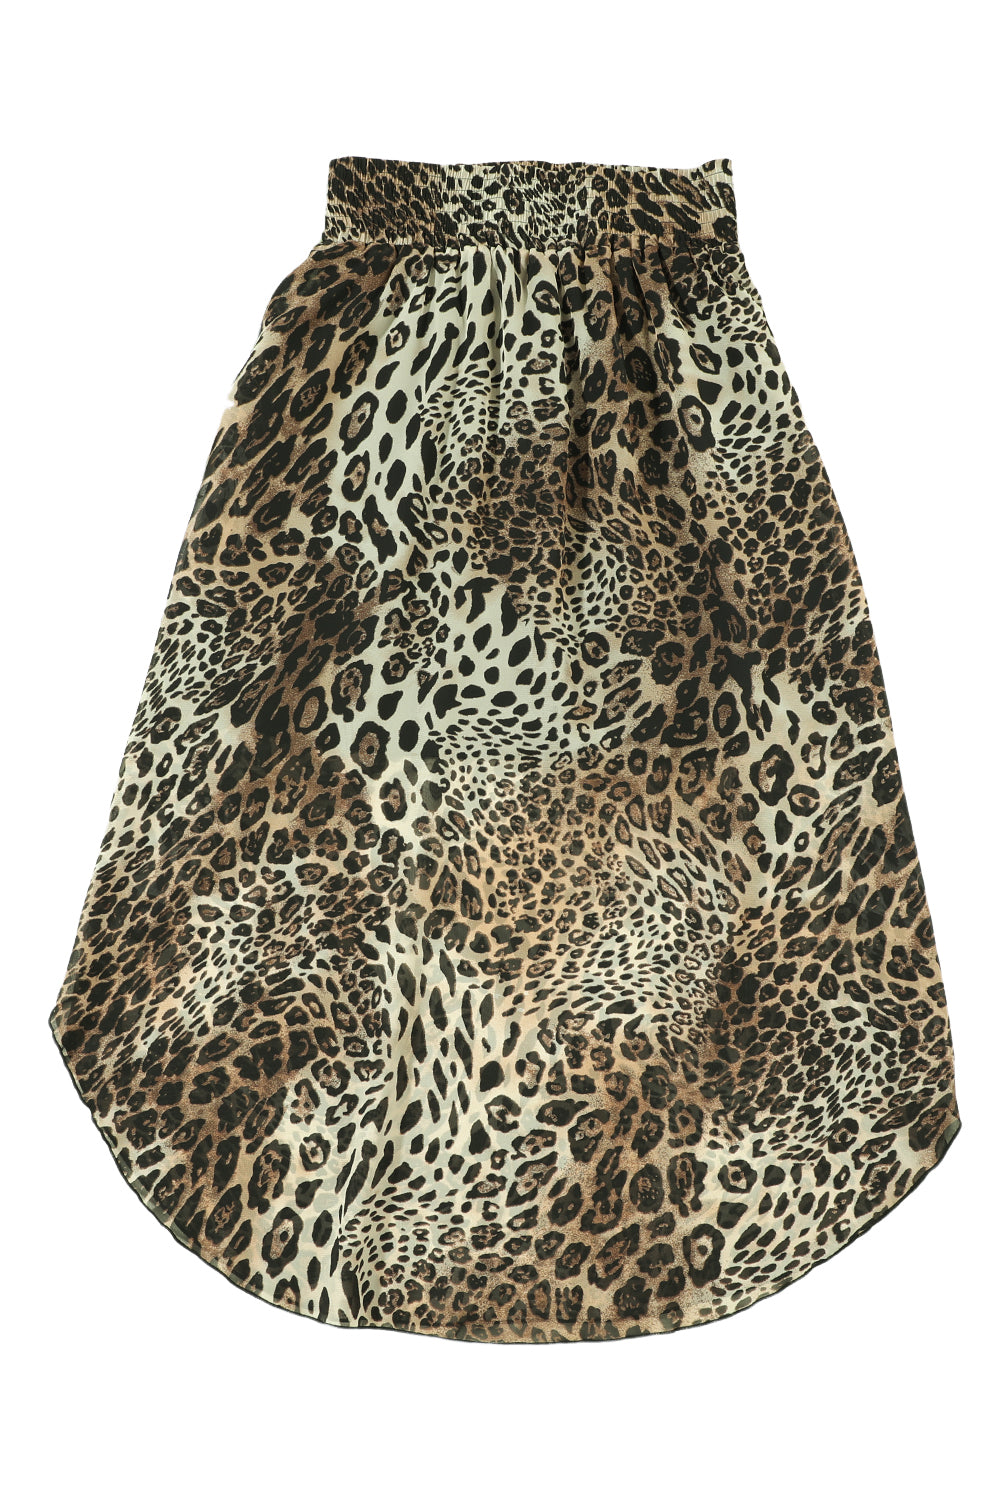 Leopardenrock mit gesmokter Taille